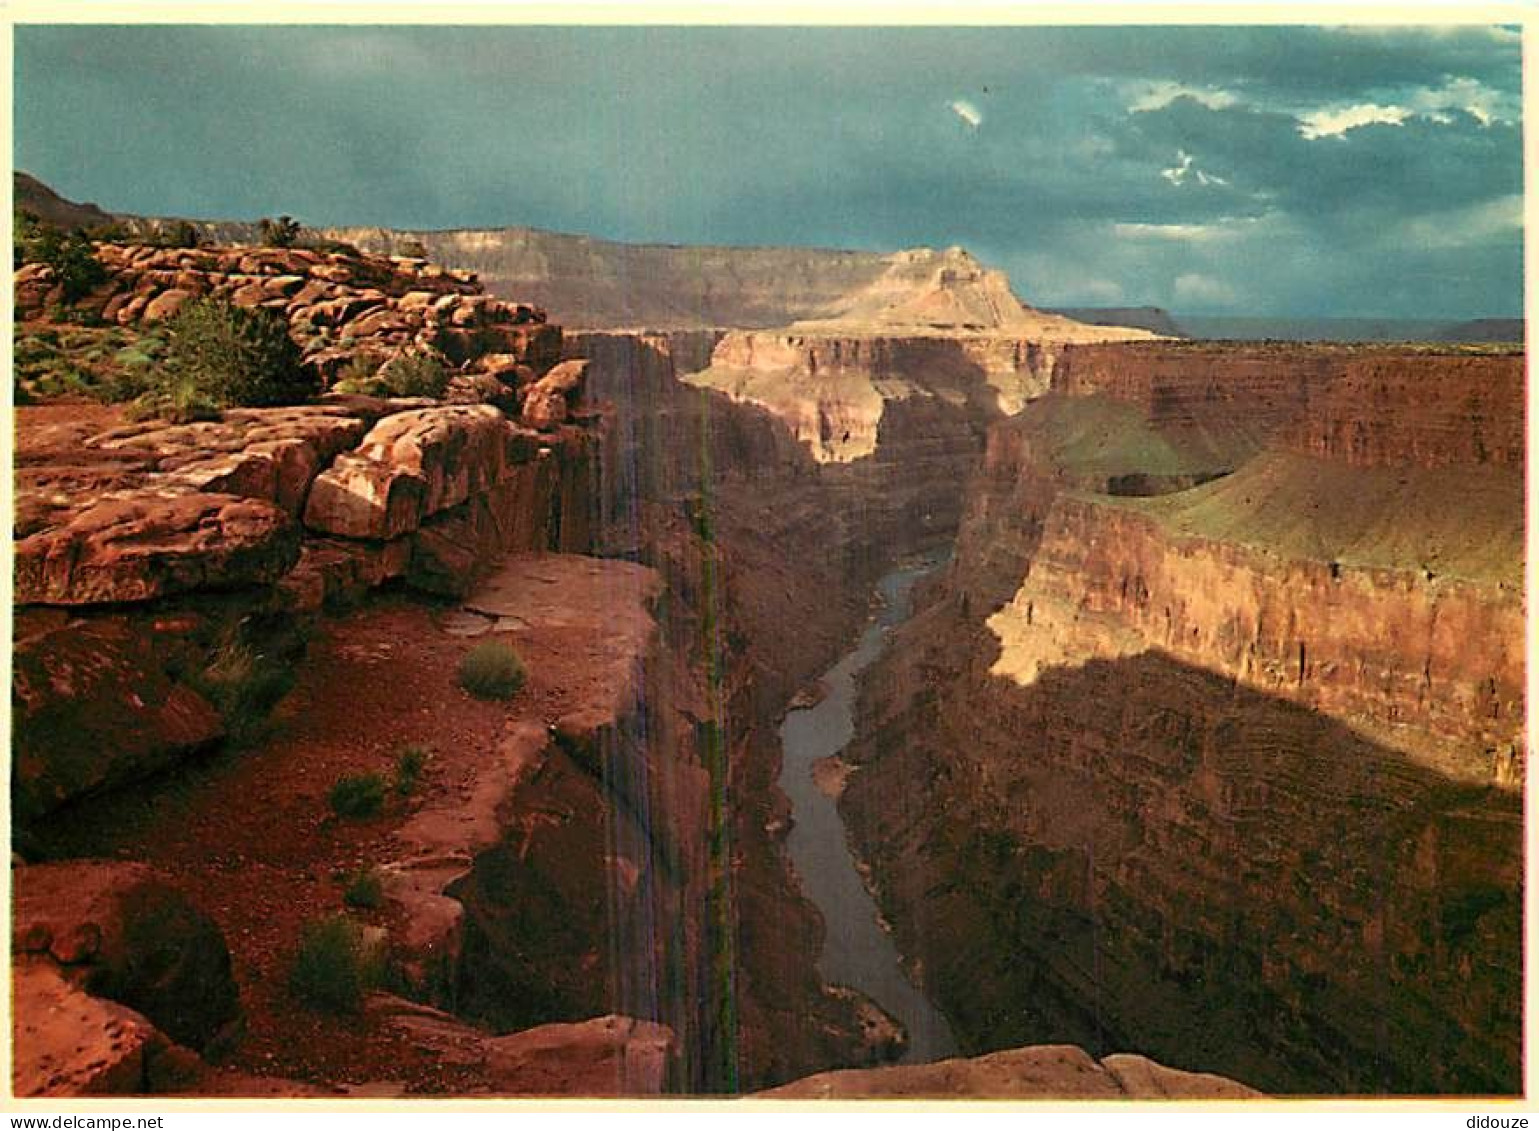 Etats Unis - Grand Canyon - View From Toroweap Overlook - Aerial View - Vue Aérienne - Etat De L'Arizona - Arizona State - Gran Cañon